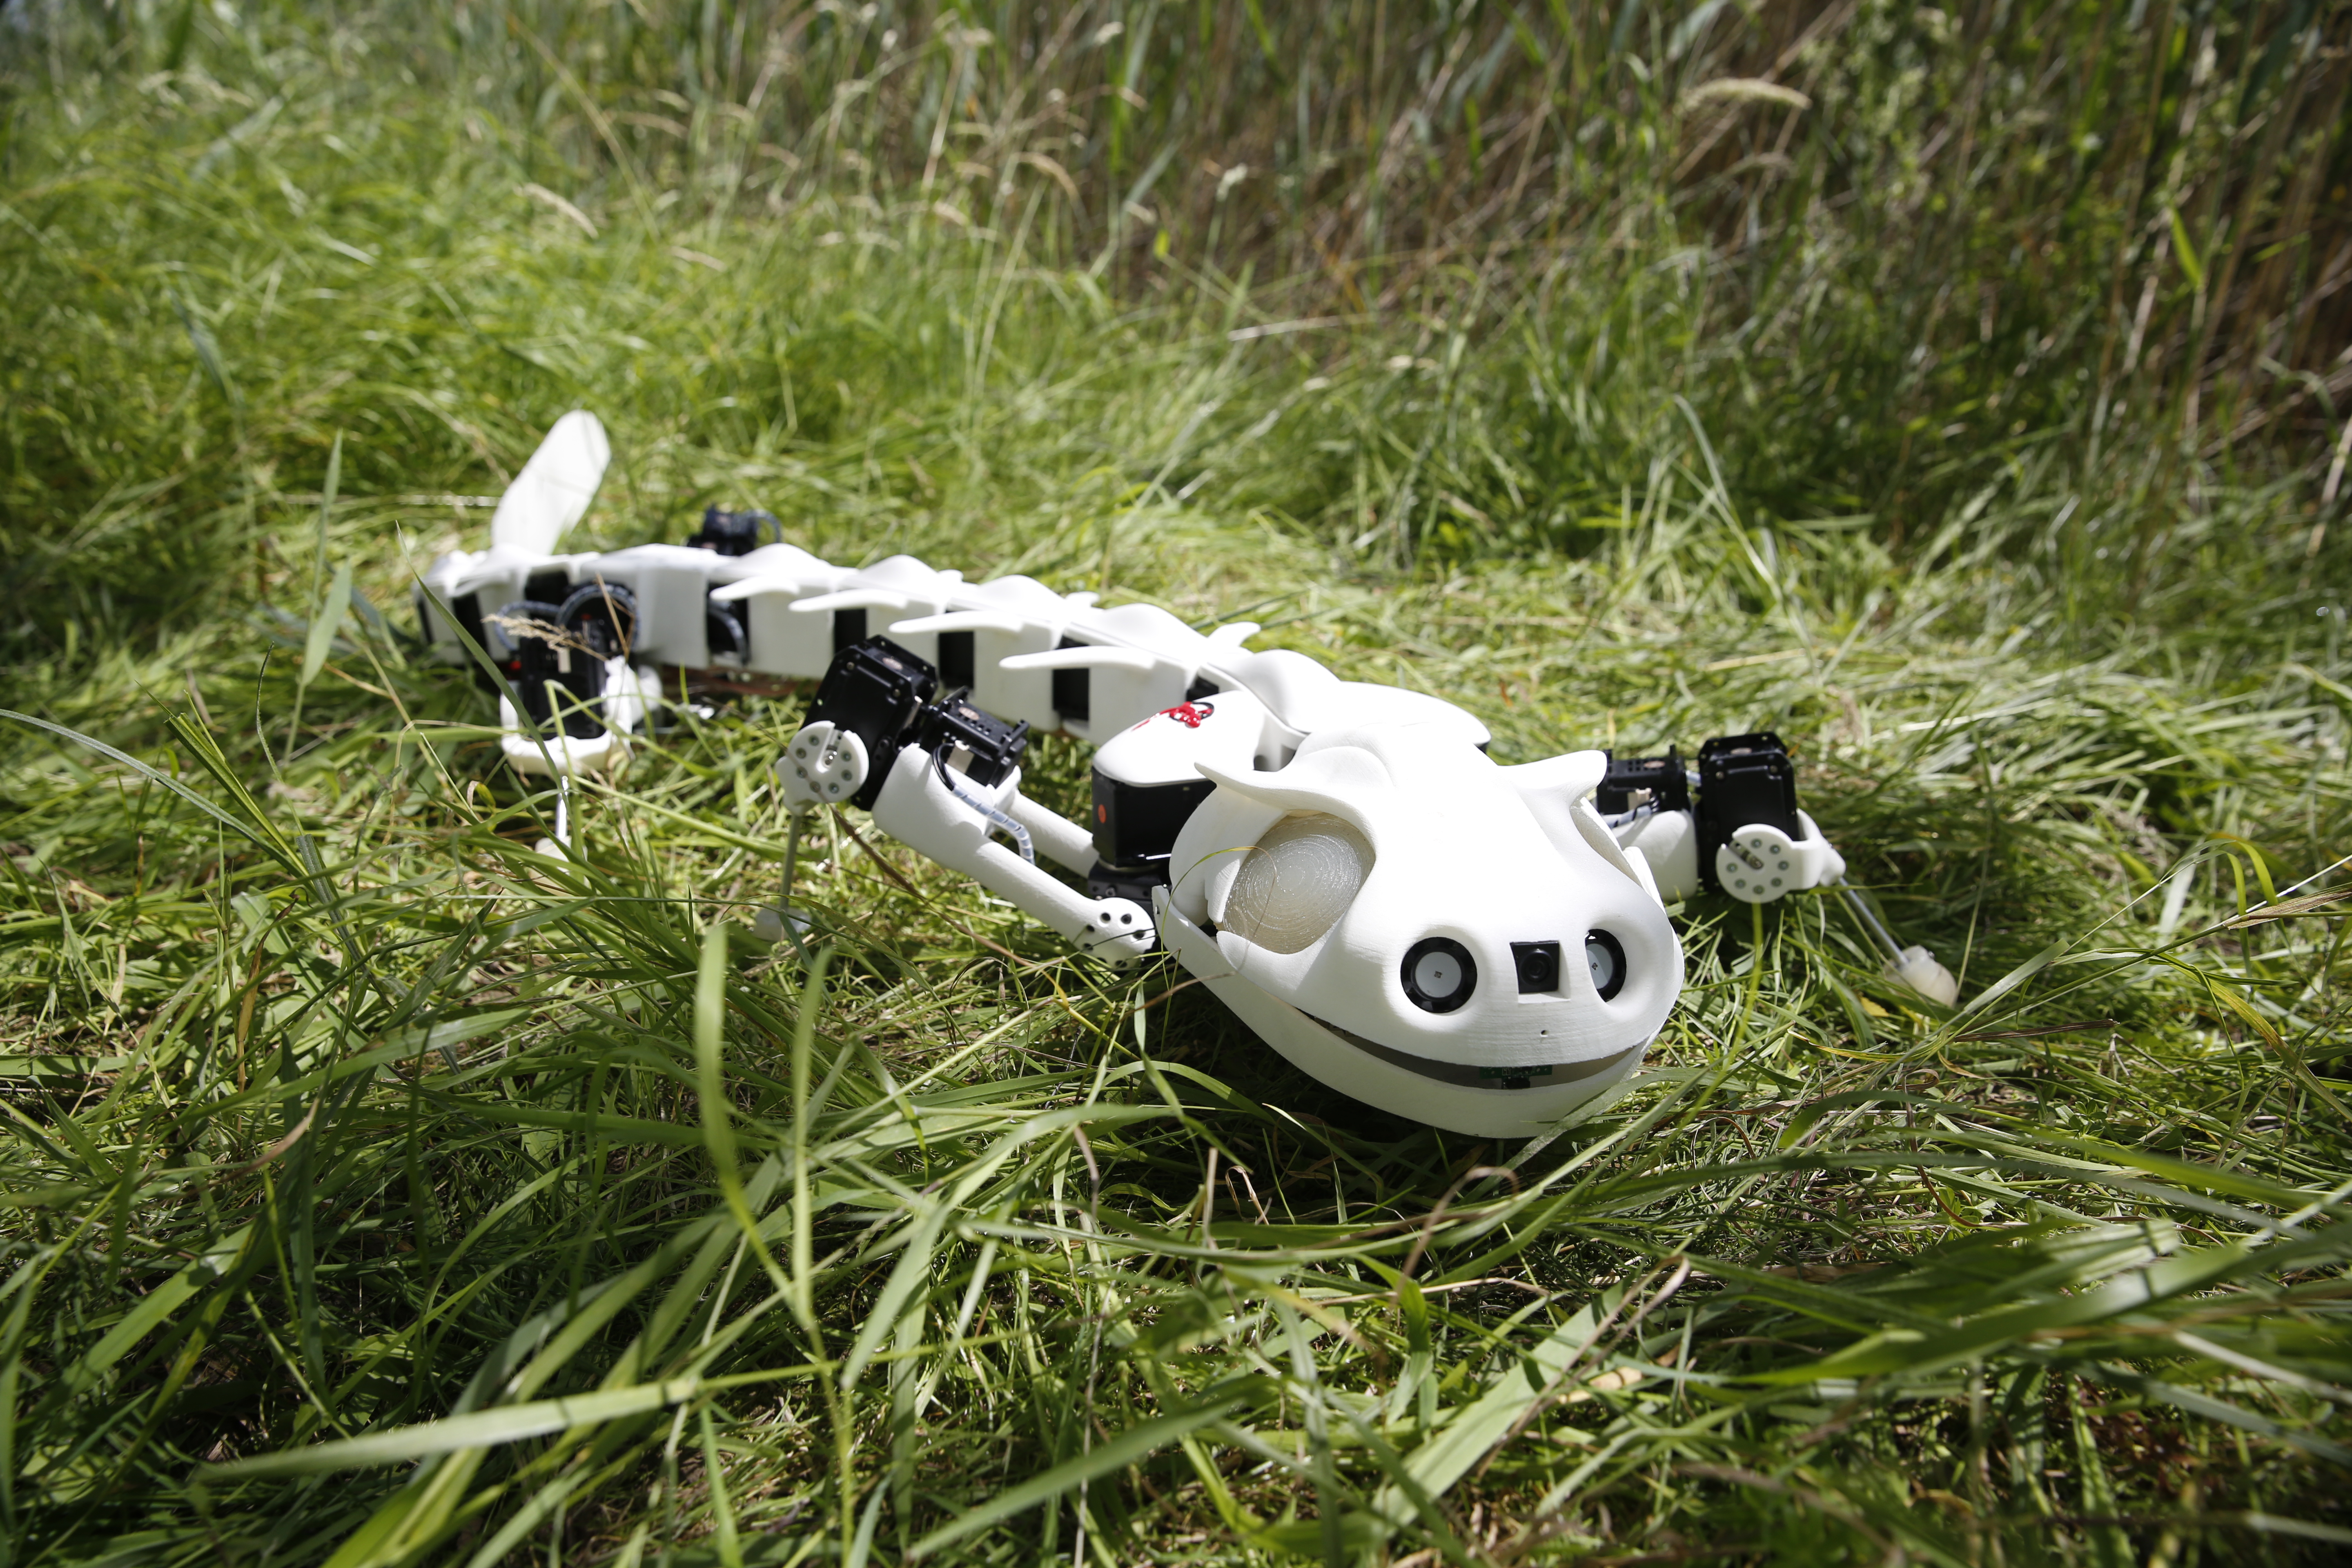 robot salamandra podria ayudar paraplejicos x3a9216